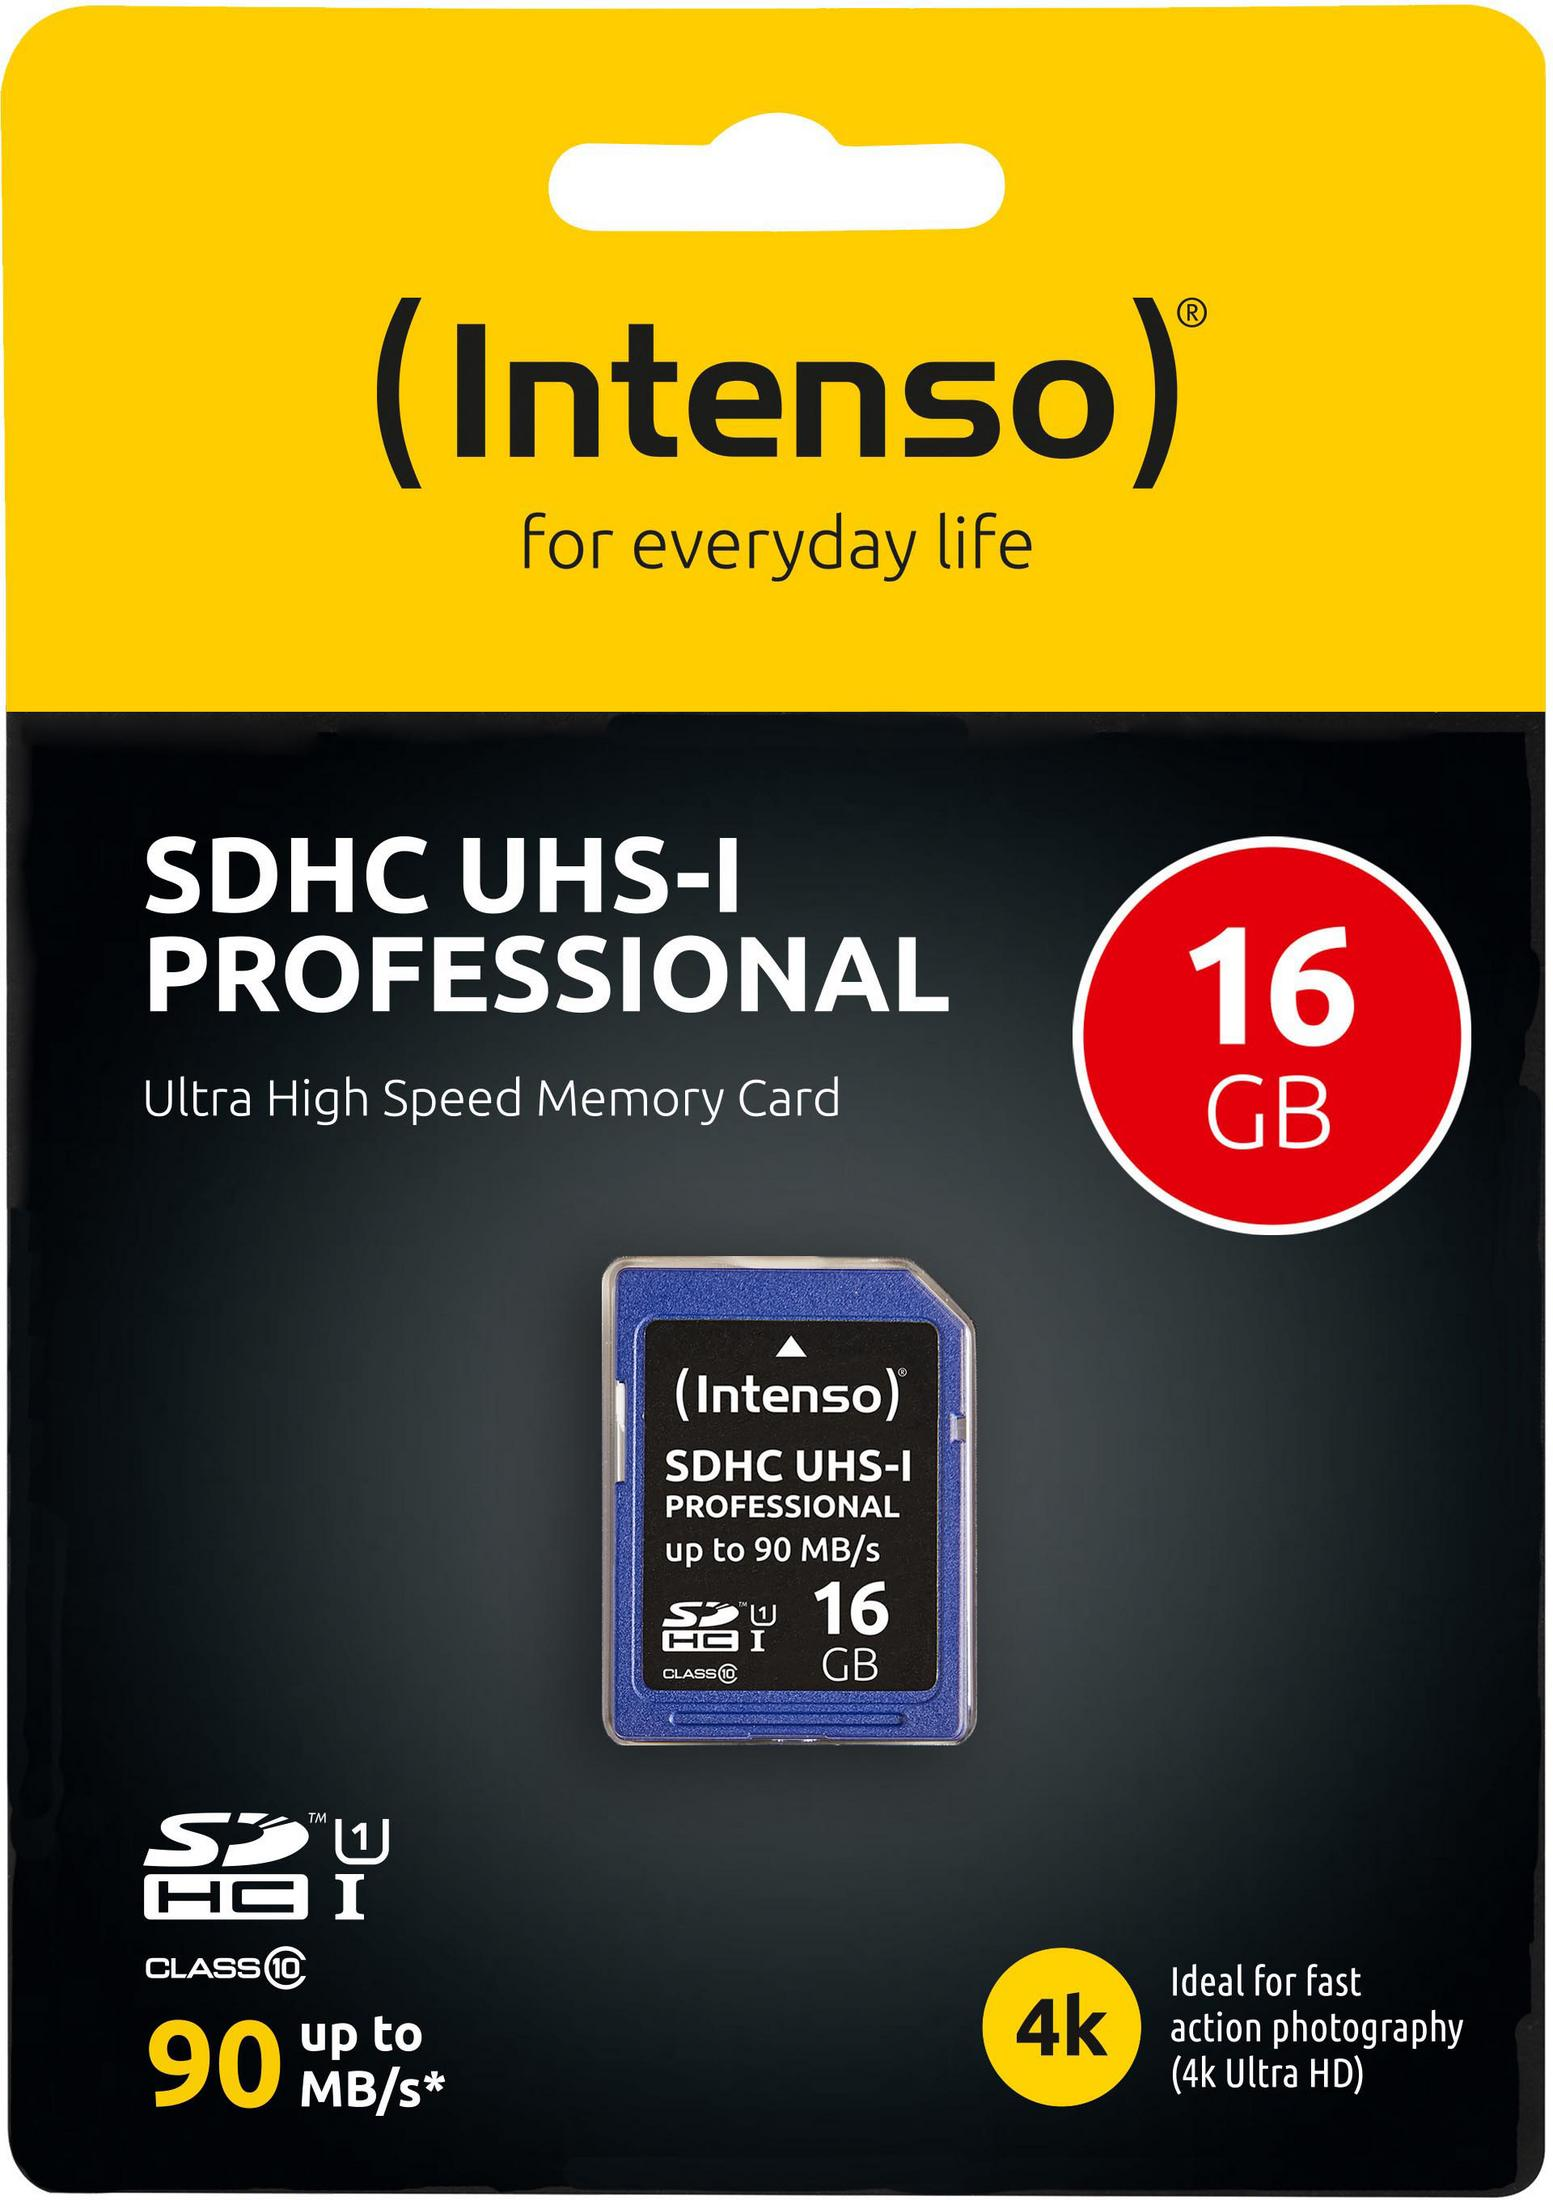 INTENSO SD Card UHS-I 16GB GB, SD SDHC 16 90 MB/s Professional, Speicherkarte